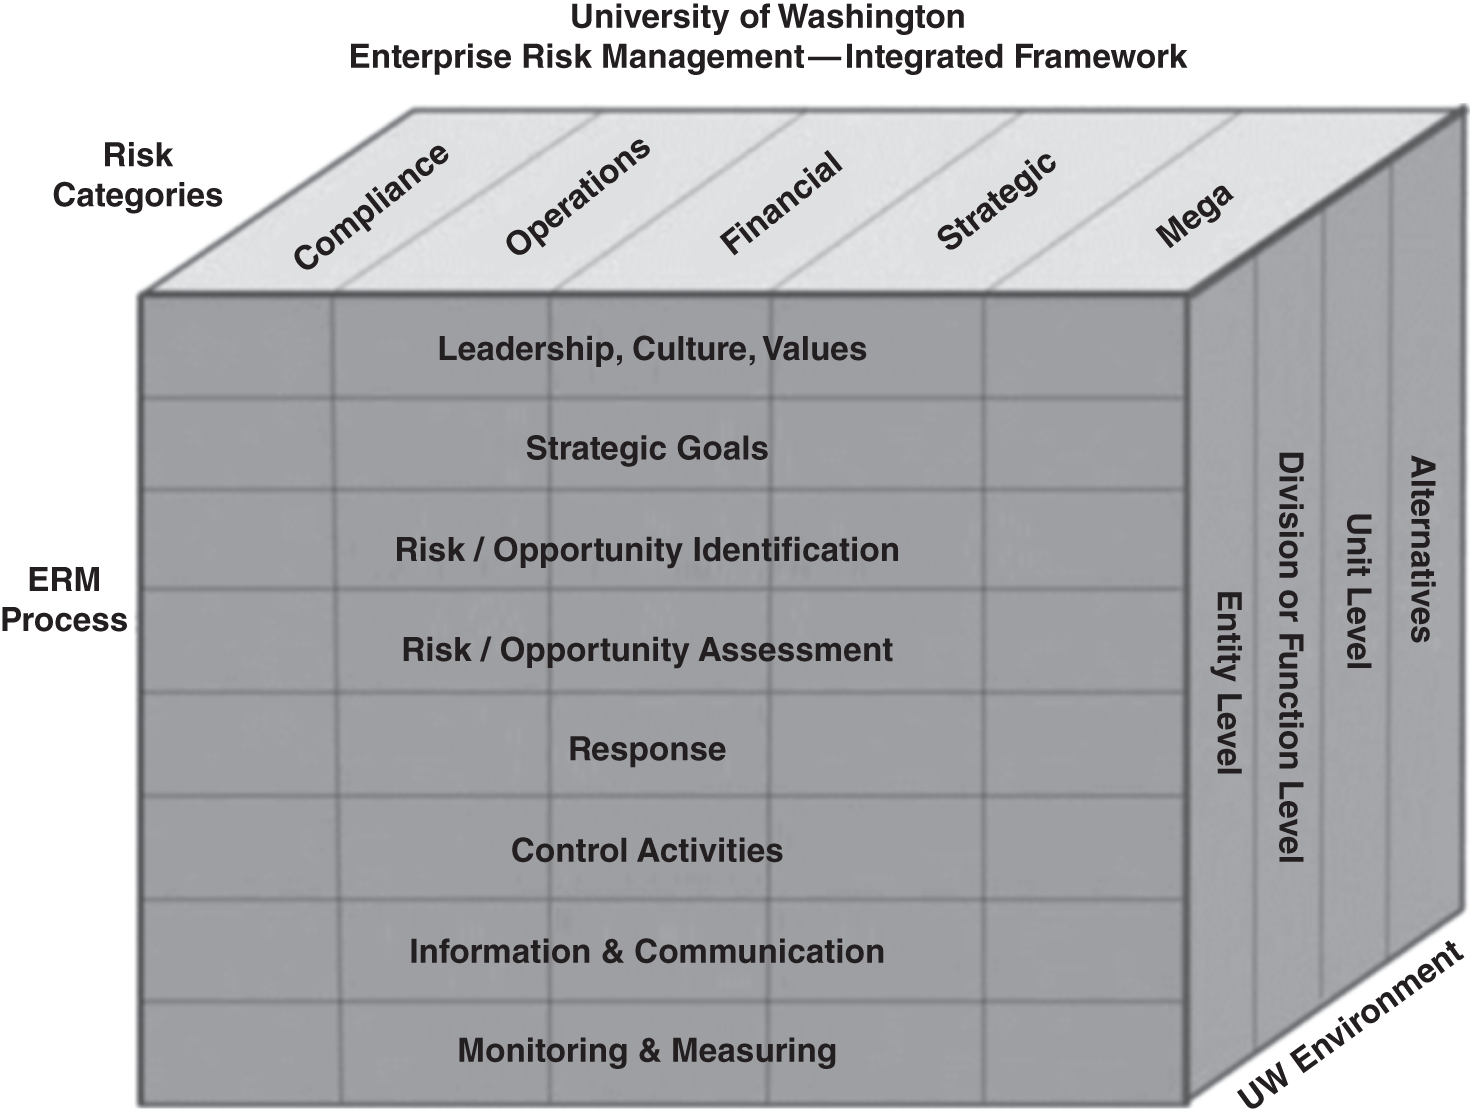 Schematic illustration of University of Washington's ERM Integrated Framework.